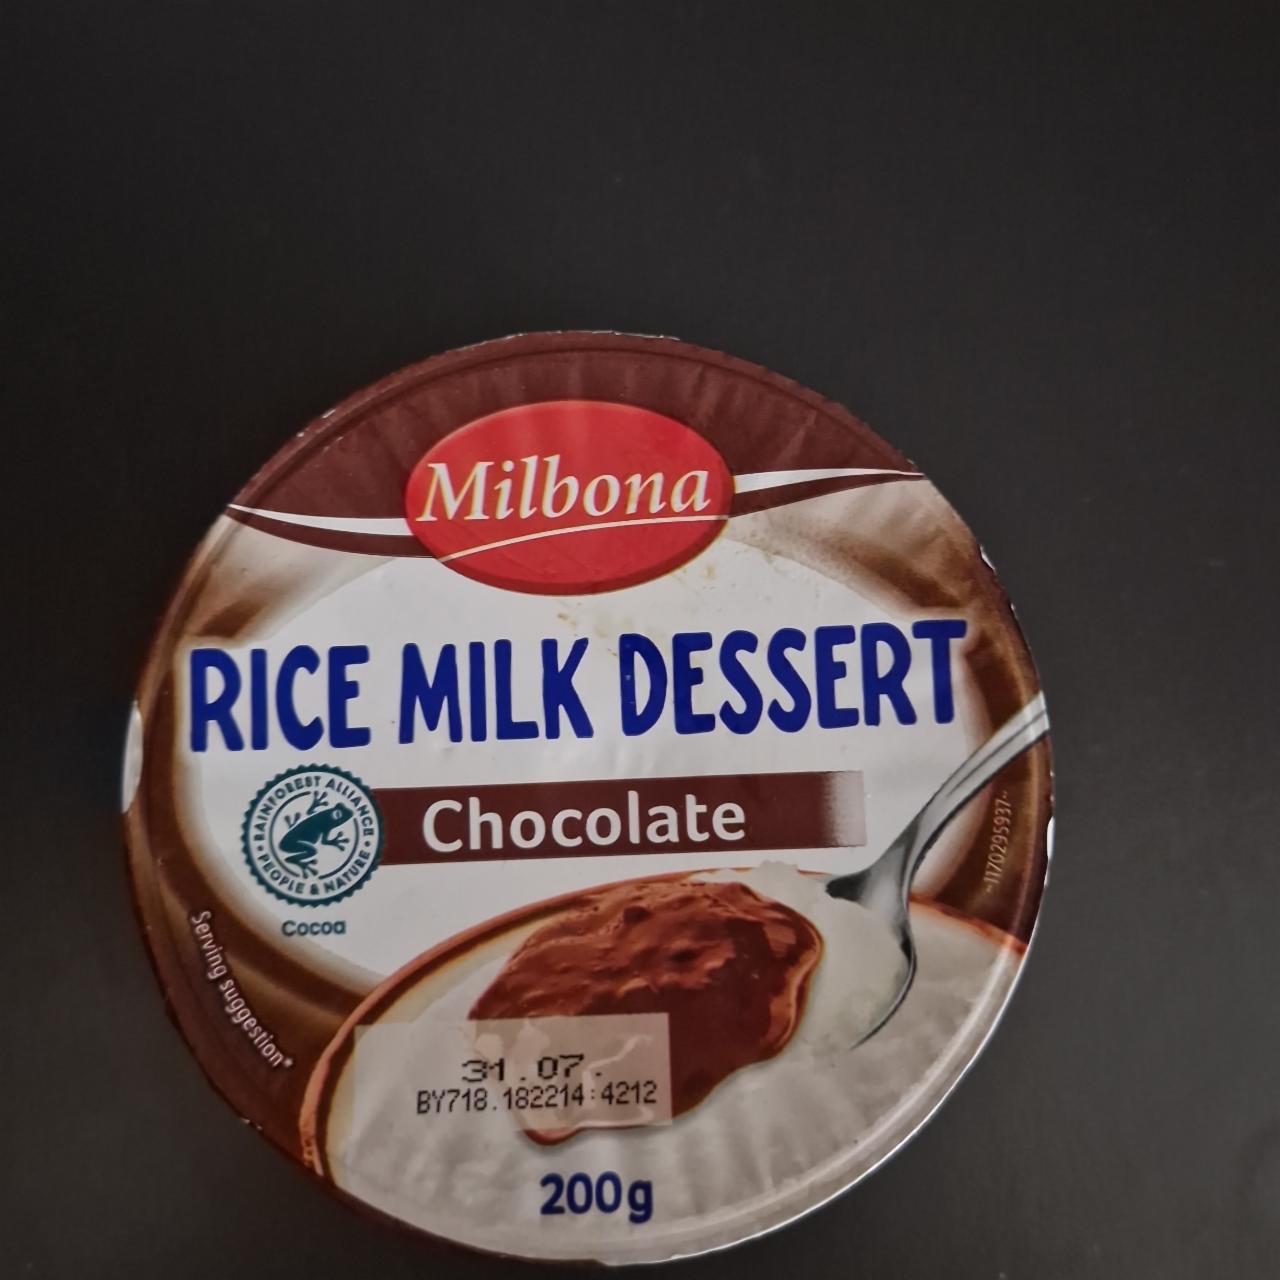 Fotografie - rice milk dessert milbona